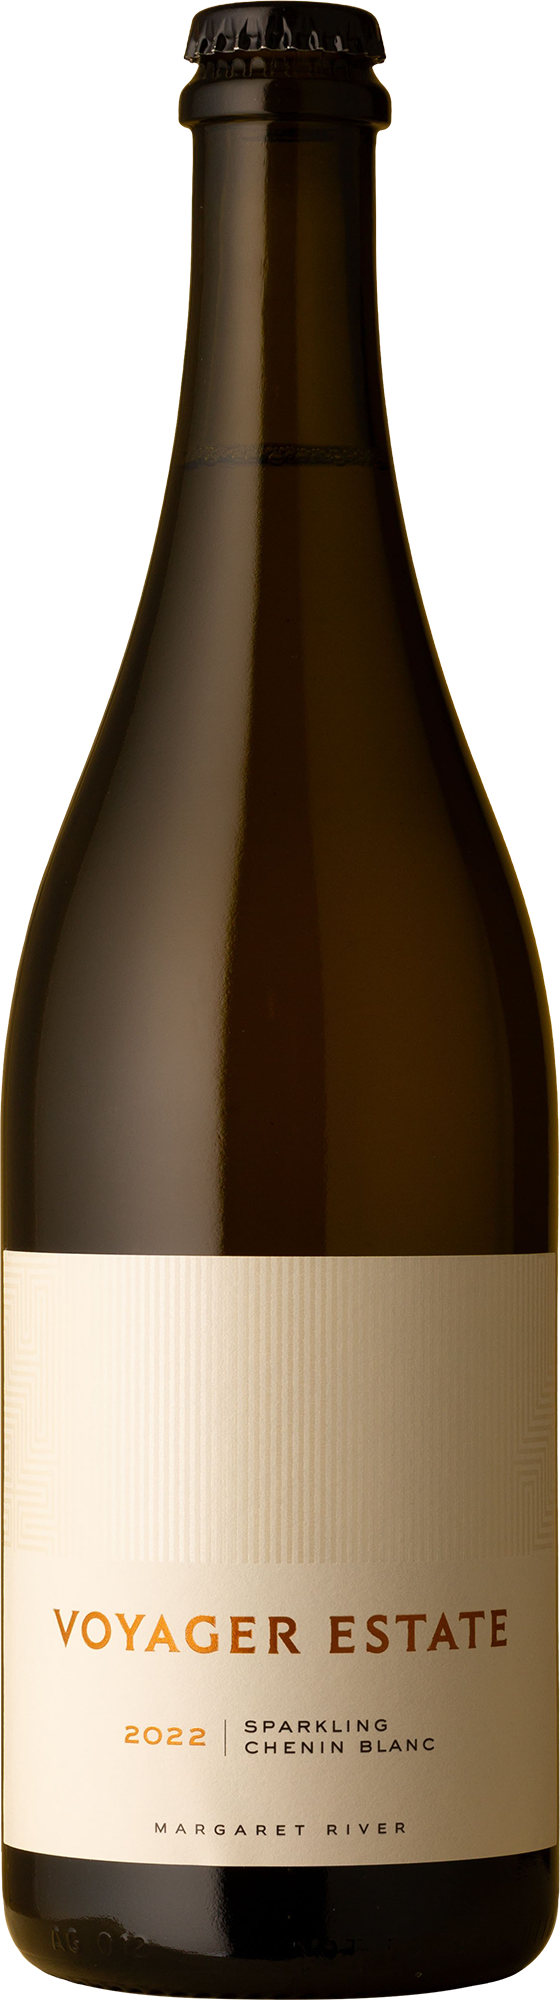 Voyager Estate - Sparkling Chenin Blanc 2022 Sparkling Wine